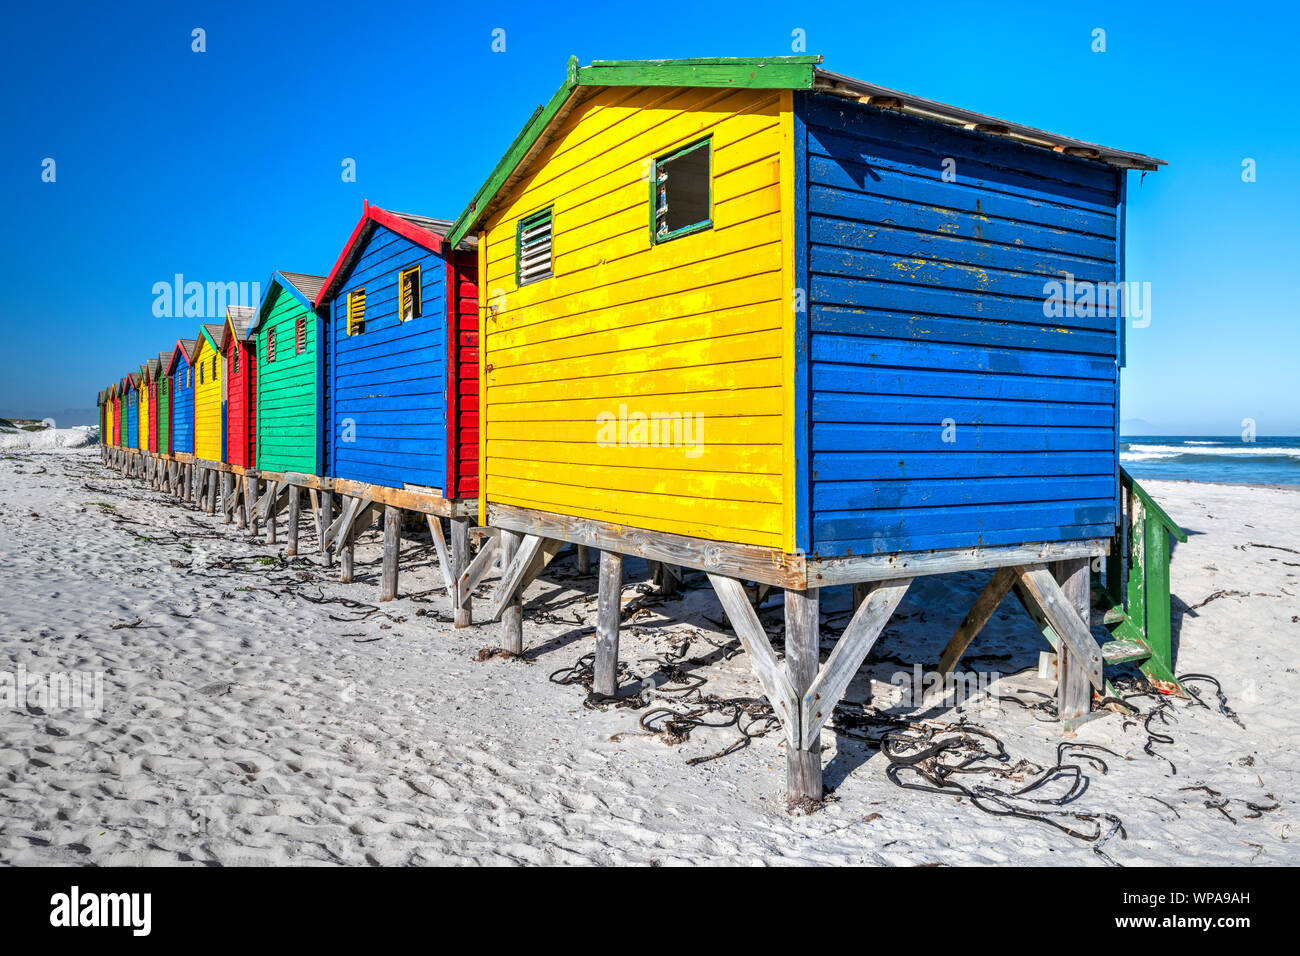 Spiaggia di colorate case sulla spiaggia, Muizenberg, Cape Town, Western Cape, Sud Africa Foto Stock